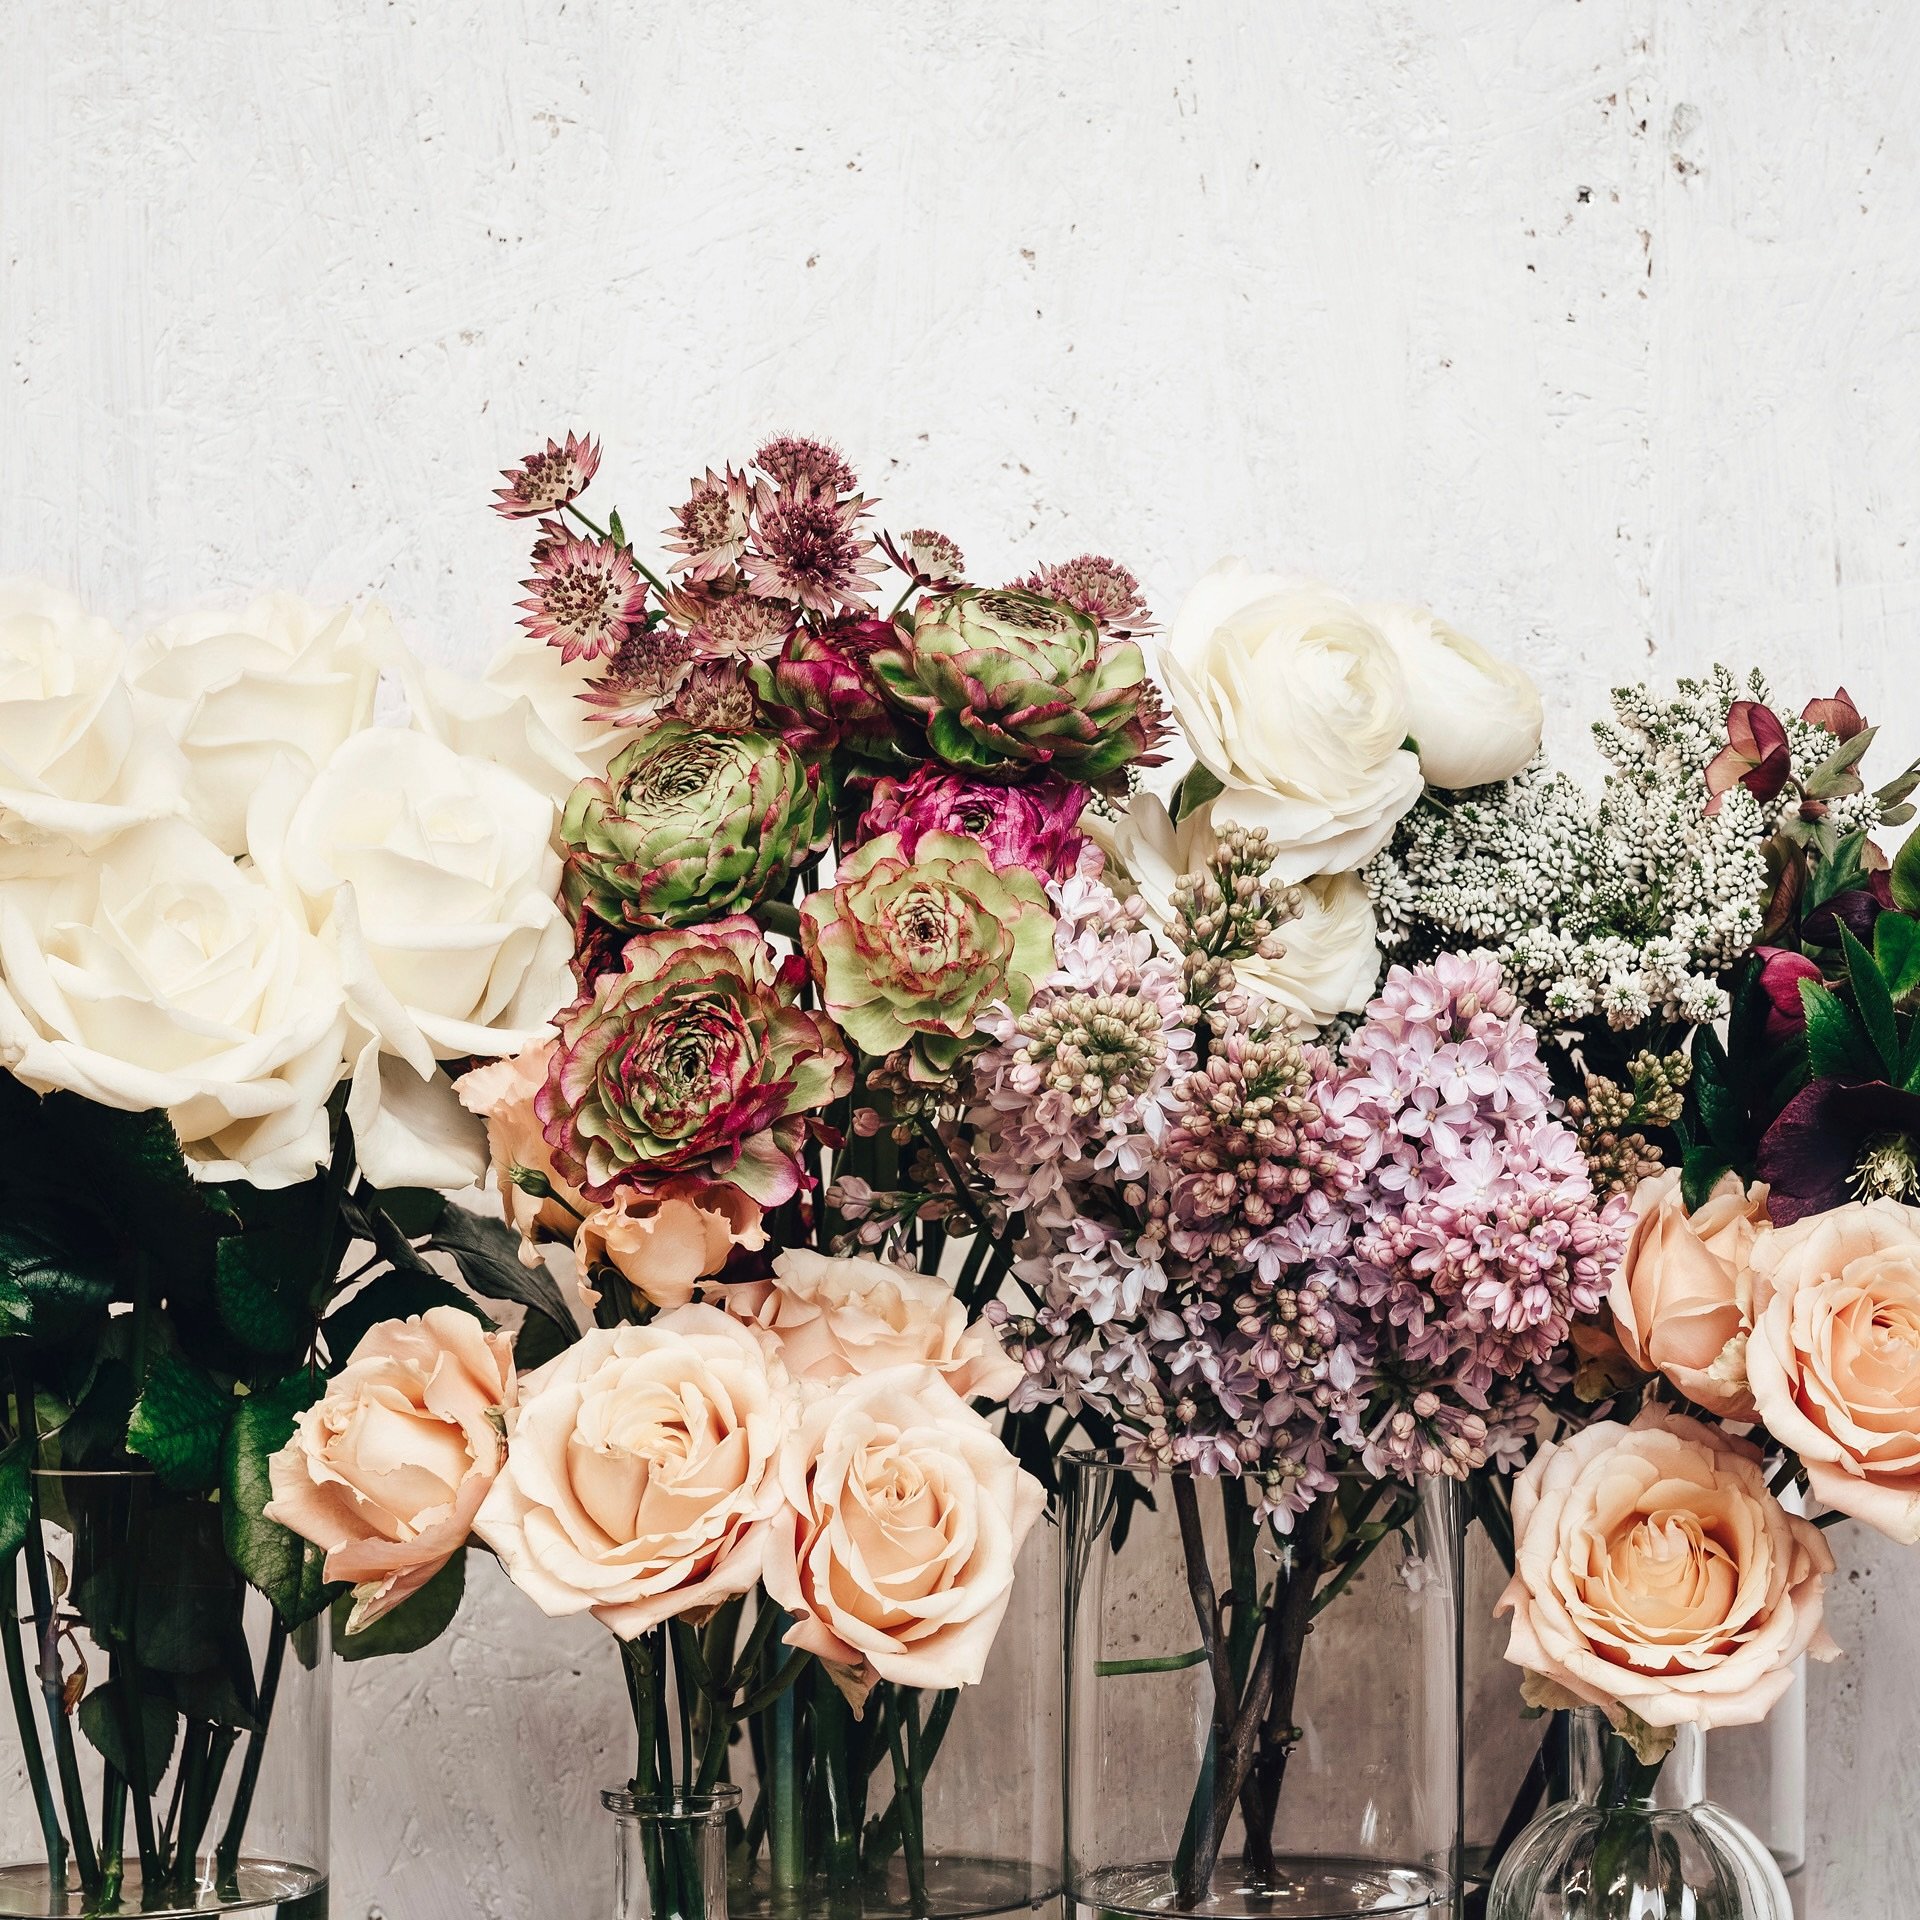 Flower wall in the workshop... ready to be plundered for creativity! 🌺 🌸
⠀⠀⠀⠀⠀⠀⠀⠀⠀
⠀⠀⠀⠀⠀⠀⠀⠀⠀
#createbloomgrow #onmyworkbench #flowersandotherstories #ringwoodflorist #simplystyledflowers #flowercore #handmade #workshopstories